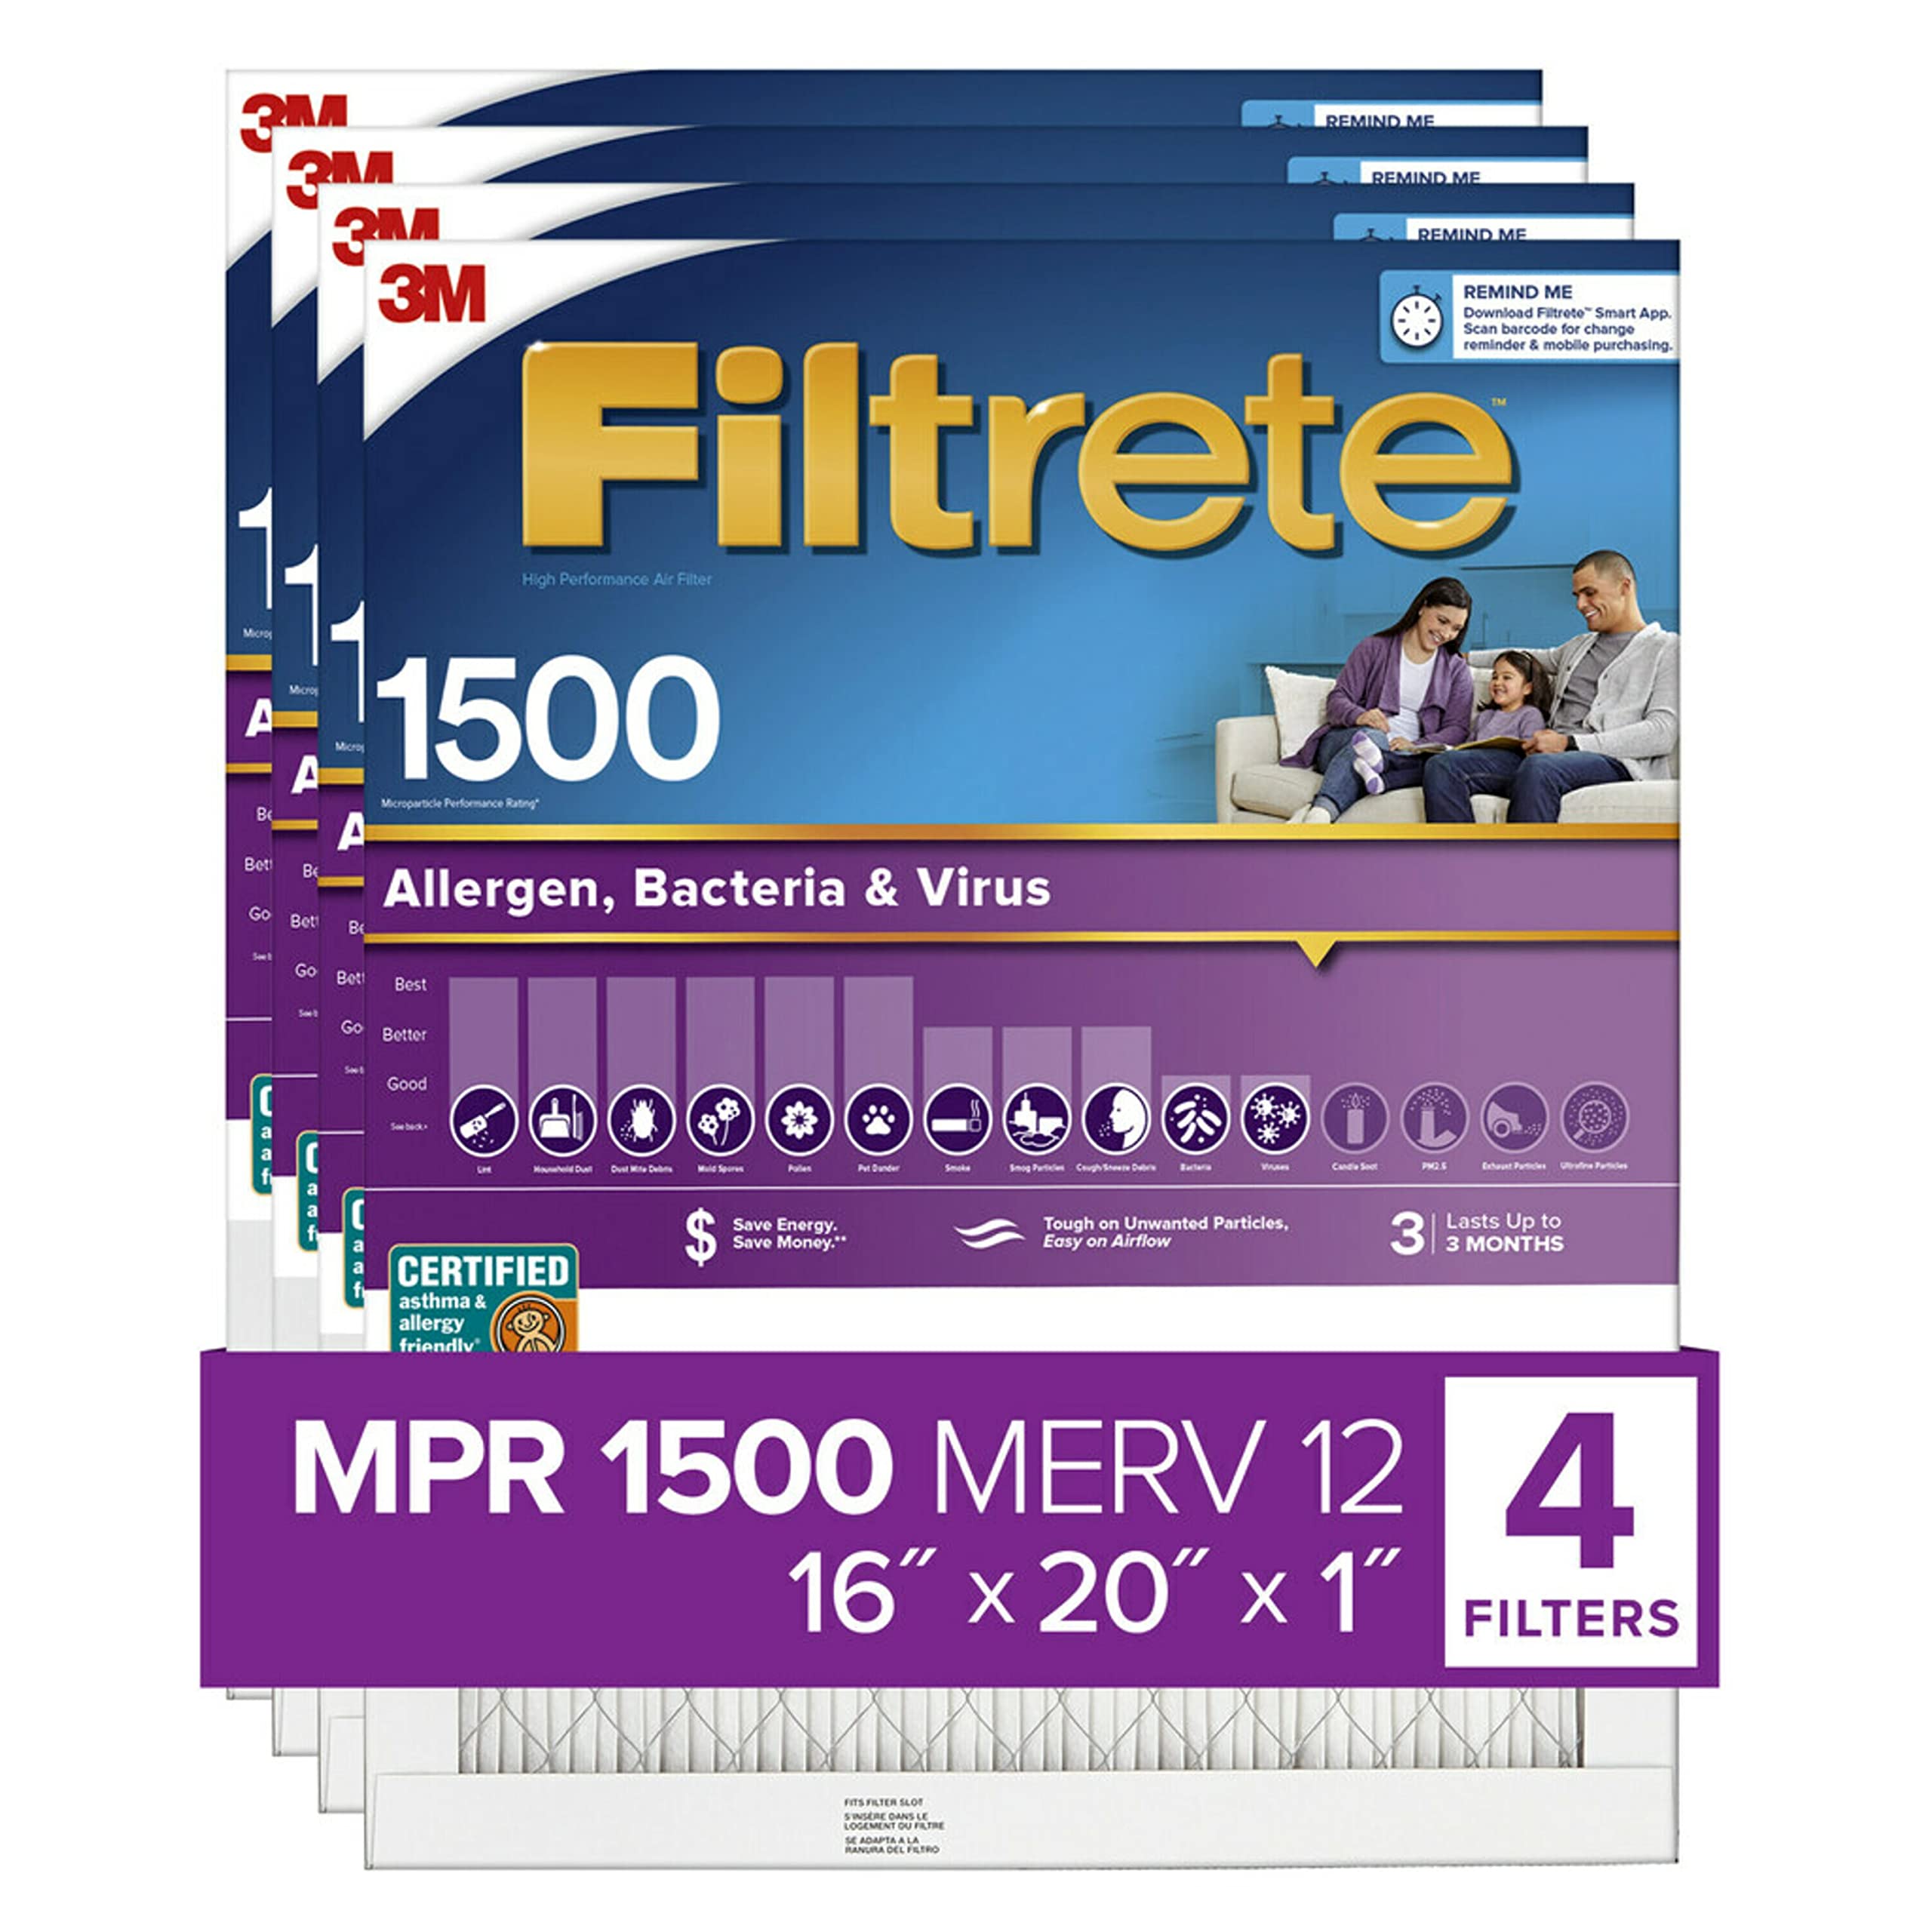 Filtrete 16x20x1 空气过滤器，MPR 1500，MERV 12，健康生活超过敏原 3 个月褶式 1 英寸空气过滤器，4 个过滤器